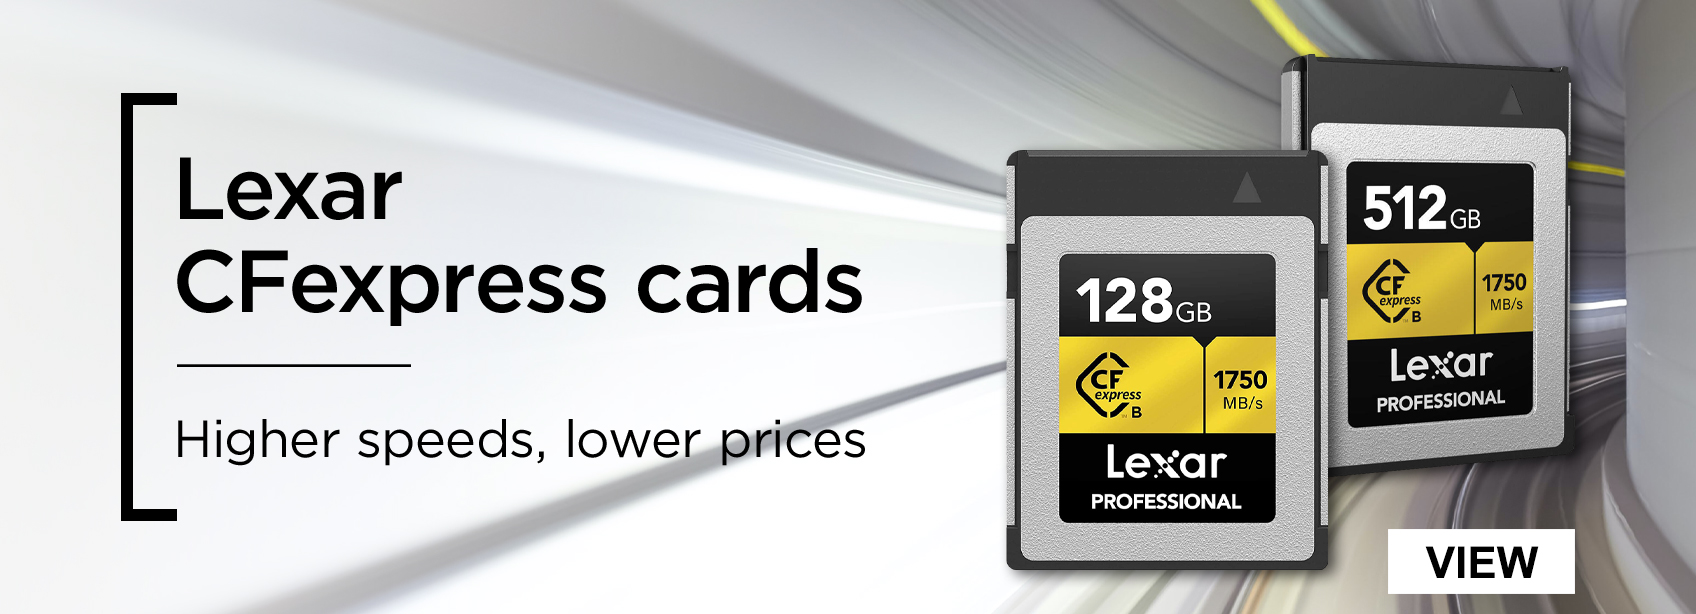 Lexar CFexpress Cards - Higher speeds, lower prices (View)